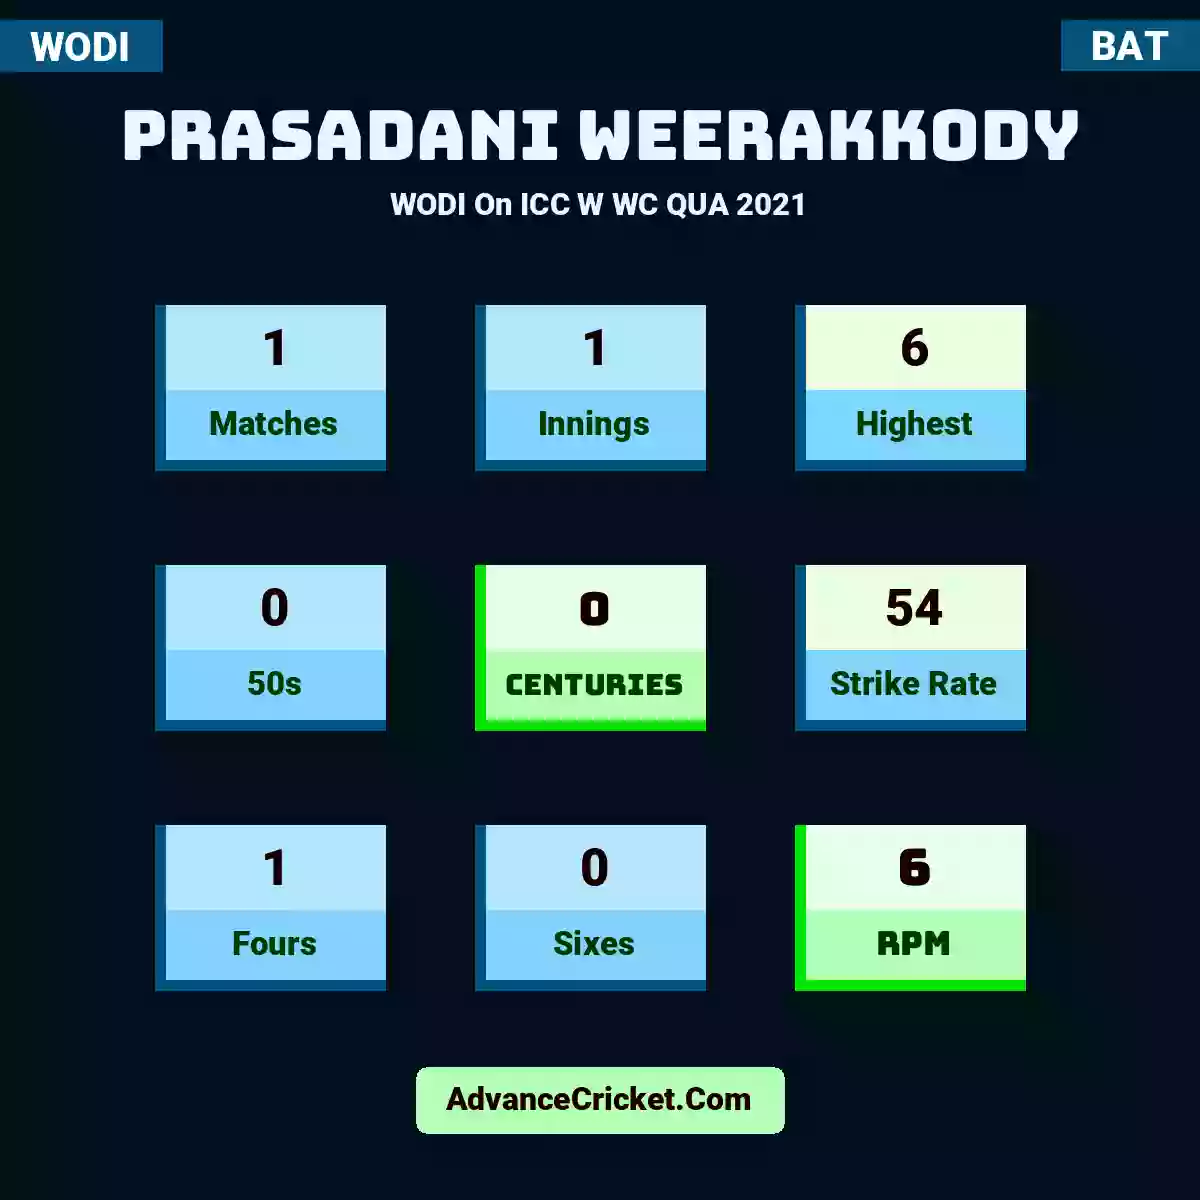 Prasadani Weerakkody WODI  On ICC W WC QUA 2021, Prasadani Weerakkody played 1 matches, scored 6 runs as highest, 0 half-centuries, and 0 centuries, with a strike rate of 54. P.Weerakkody hit 1 fours and 0 sixes, with an RPM of 6.